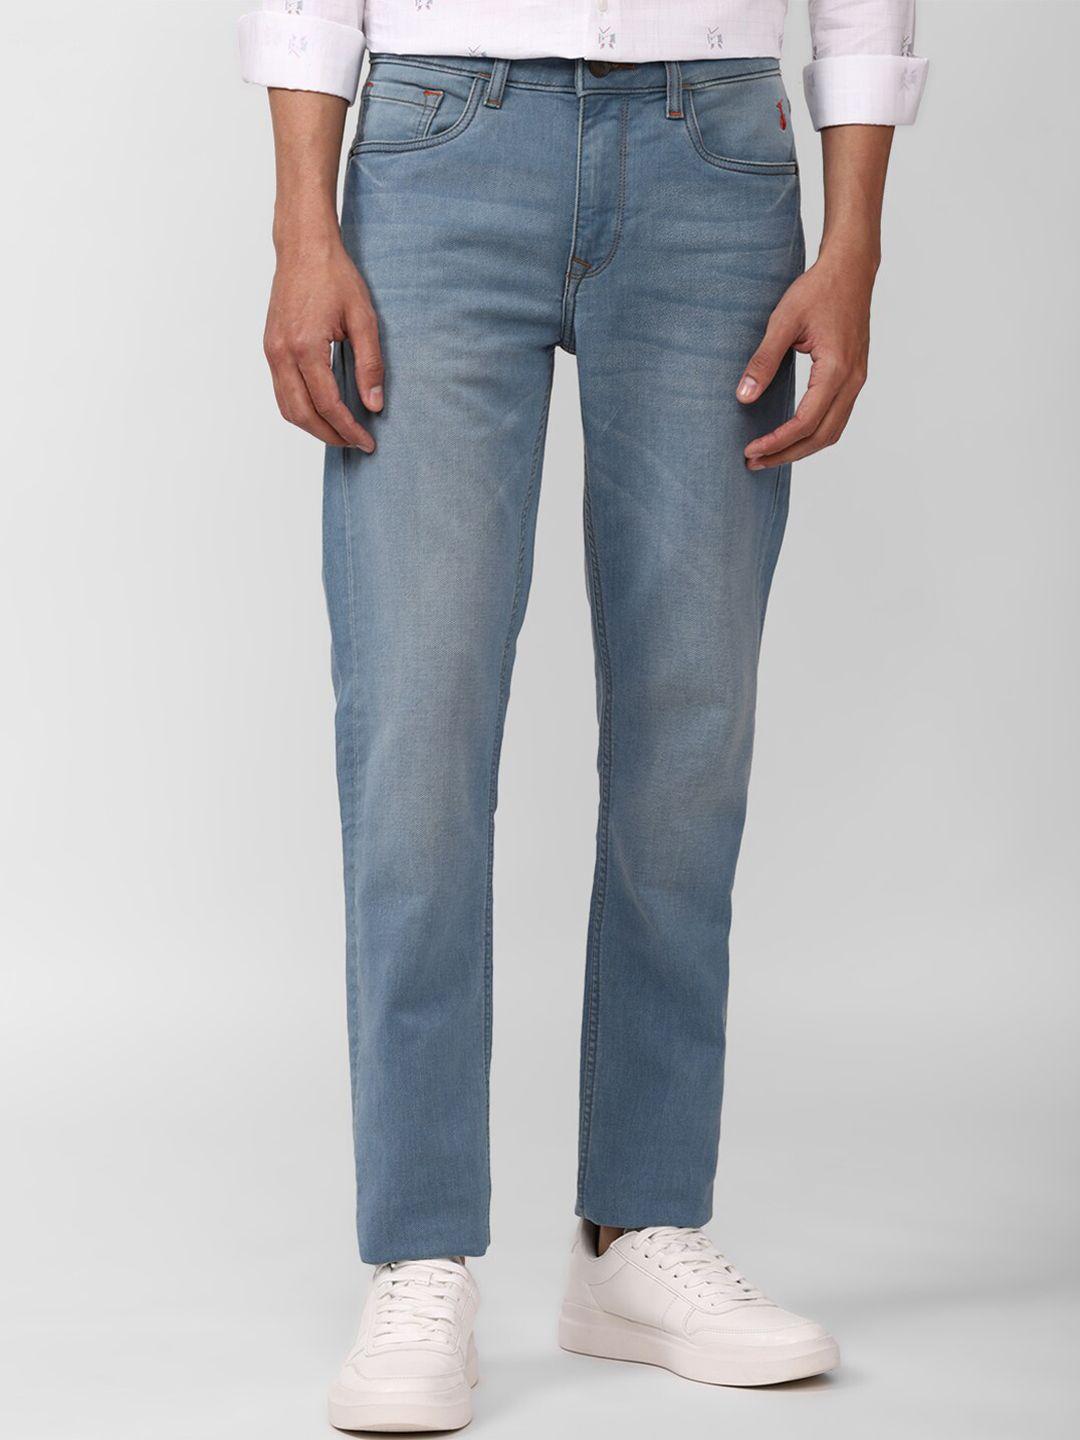 simon-carter-london-men-blue-slim-fit-light-fade-jeans